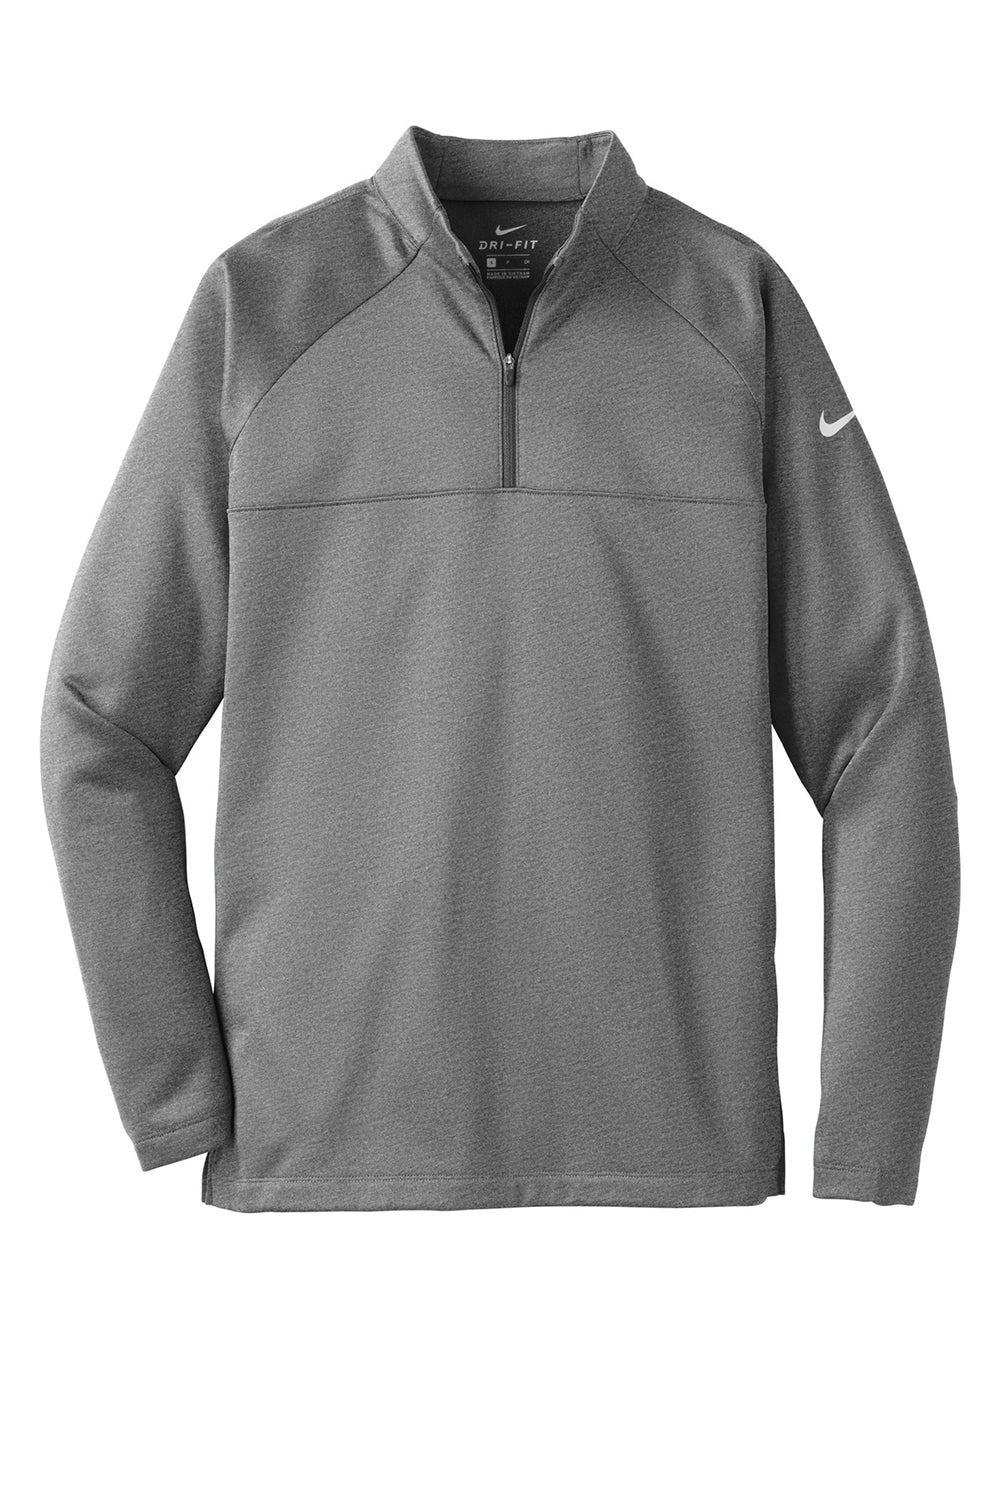 Nike NKAH6254 Mens Therma-Fit Moisture Wicking Fleece 1/4 Zip Sweatshirt Heather Grey Flat Front